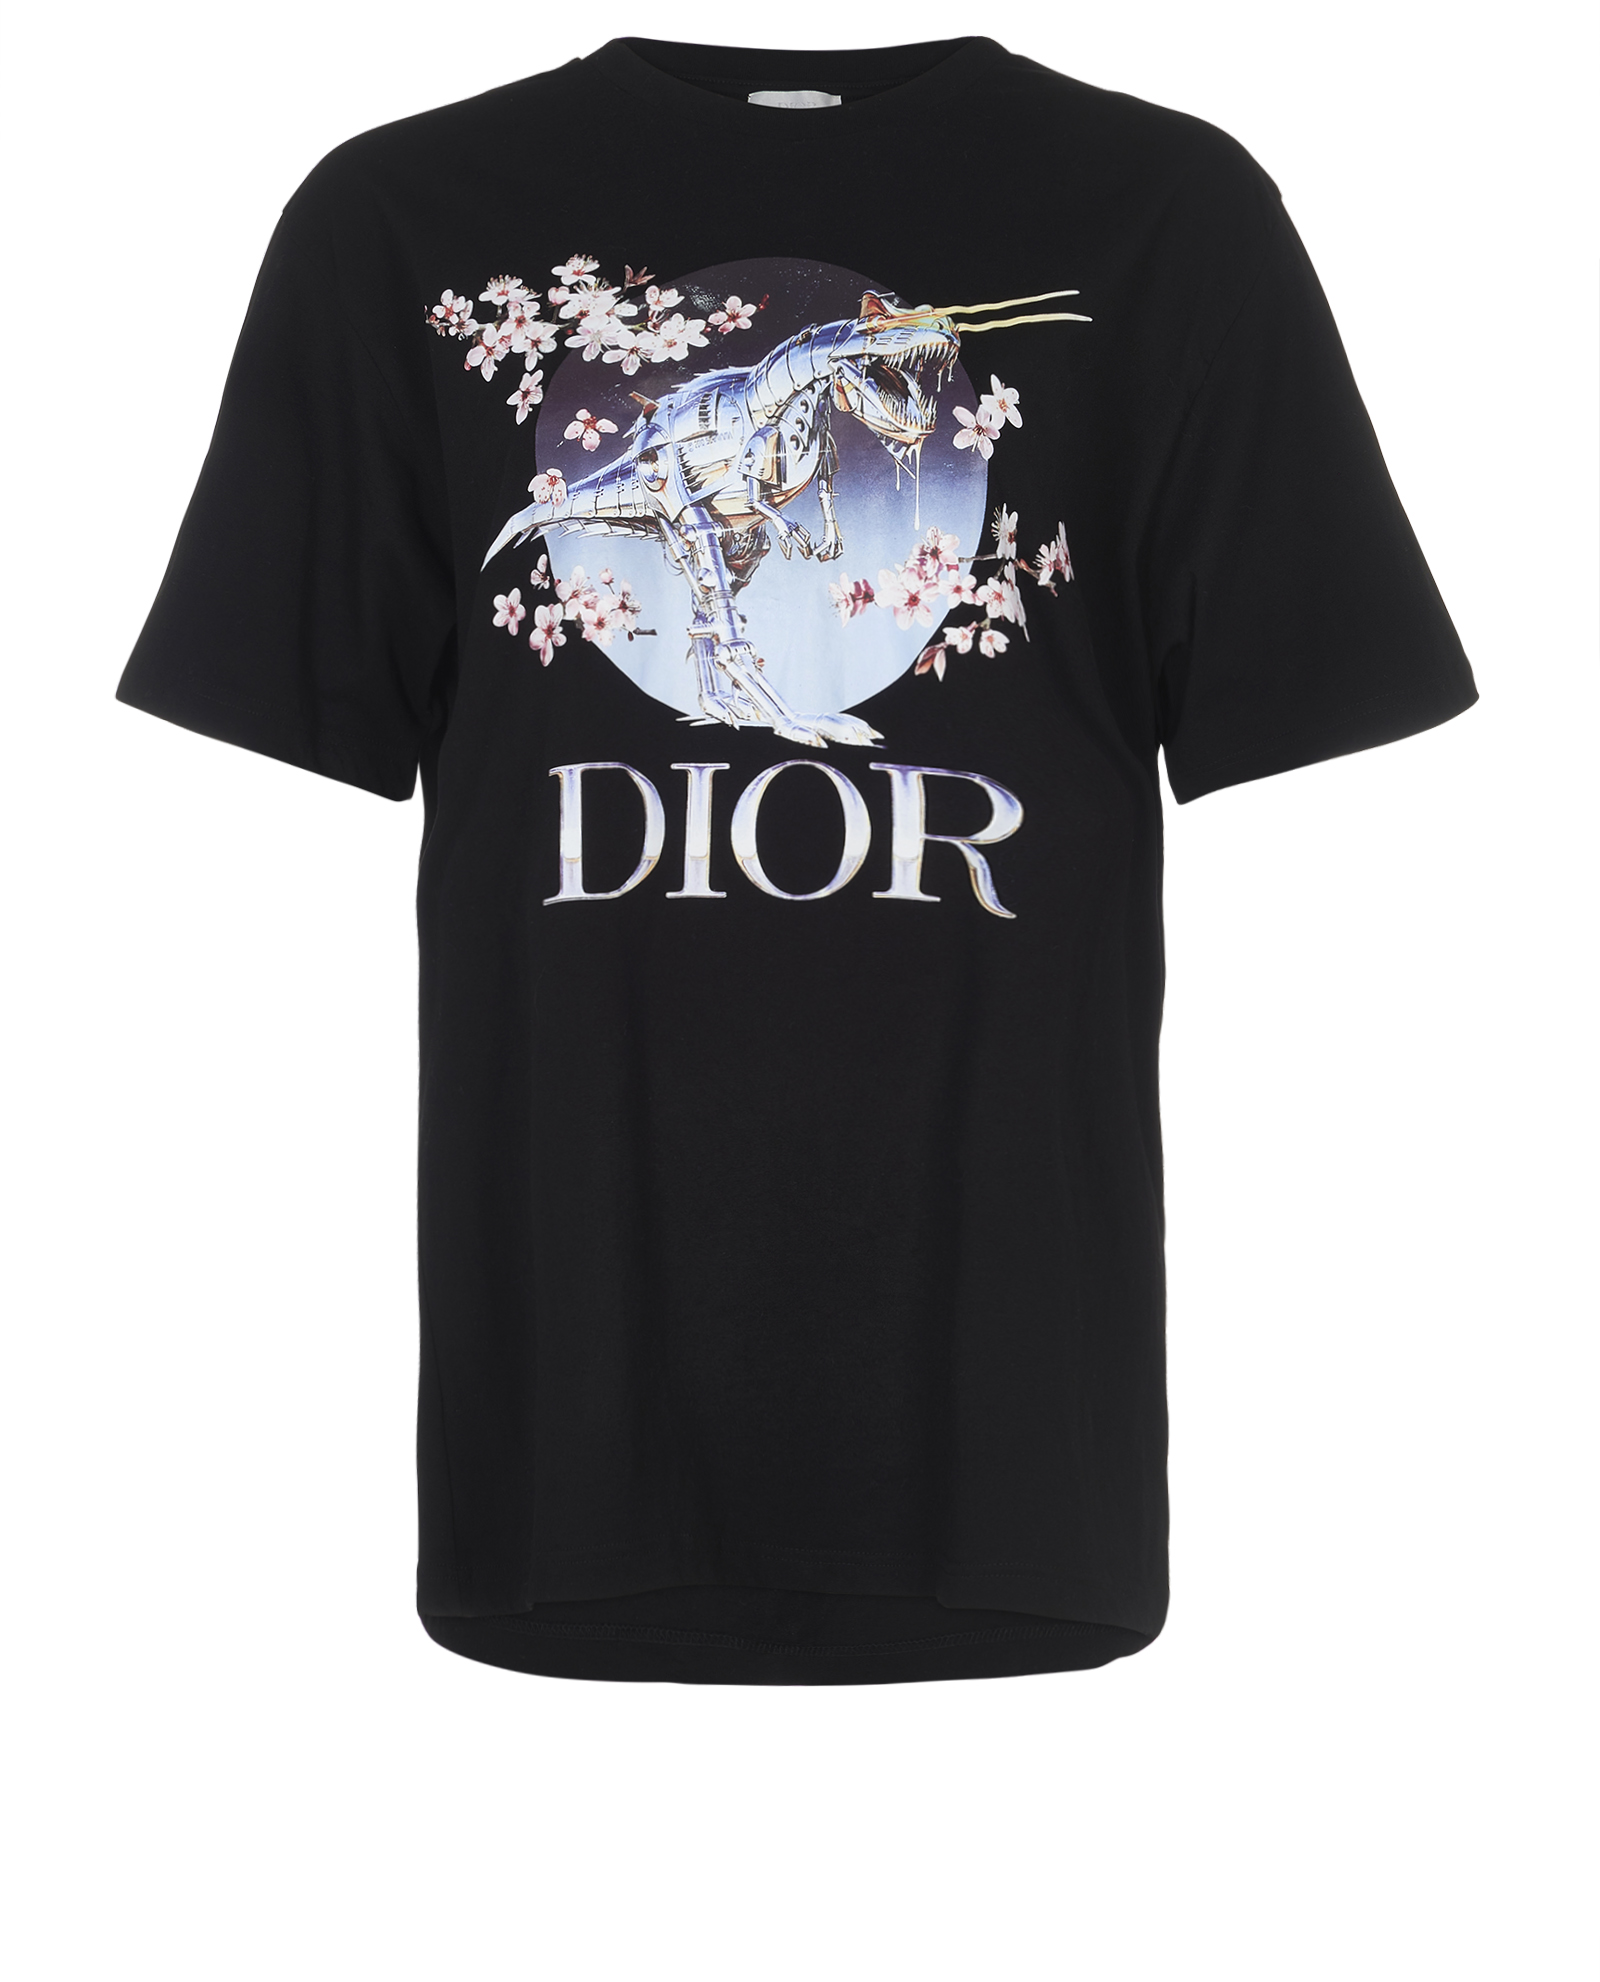 Christian Dior Sorayama 2019 Dinosaur T Shirt, Tops - Designer Exchange ...